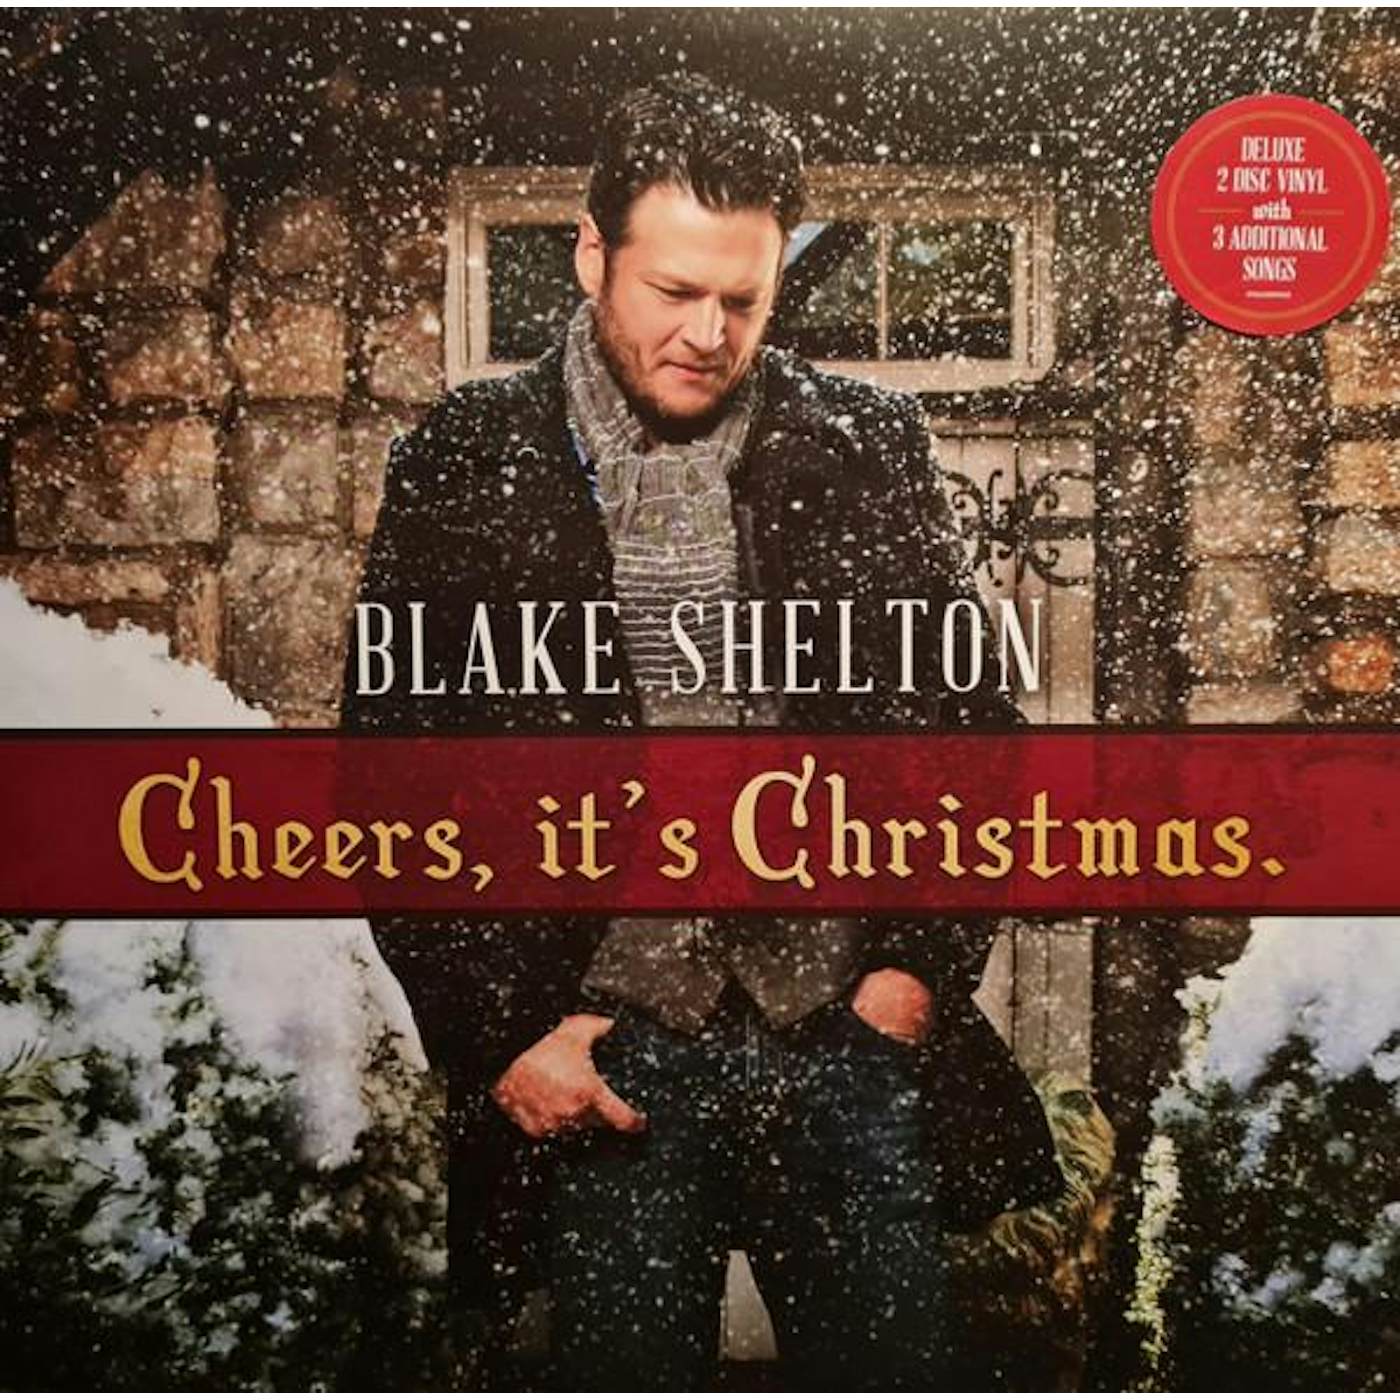 Blake Shelton CHEERS, IT'S CHRISTMAS (DELUXE) Vinyl Record